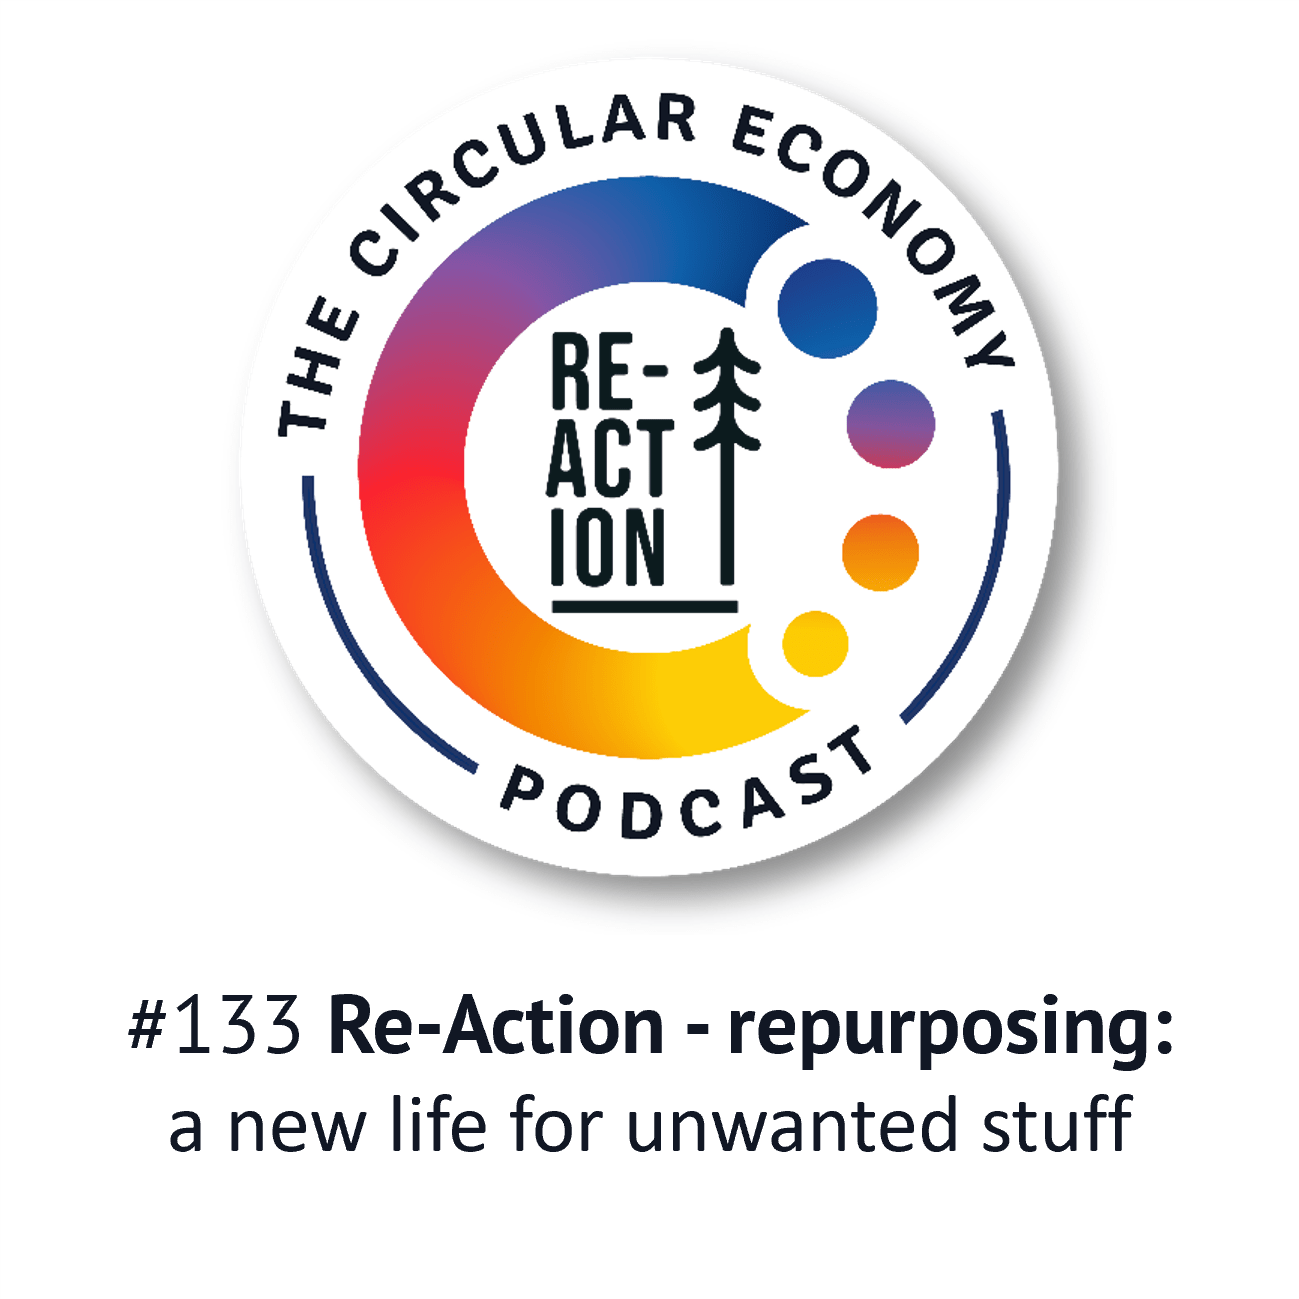 Ep133 Re-Action repurposing